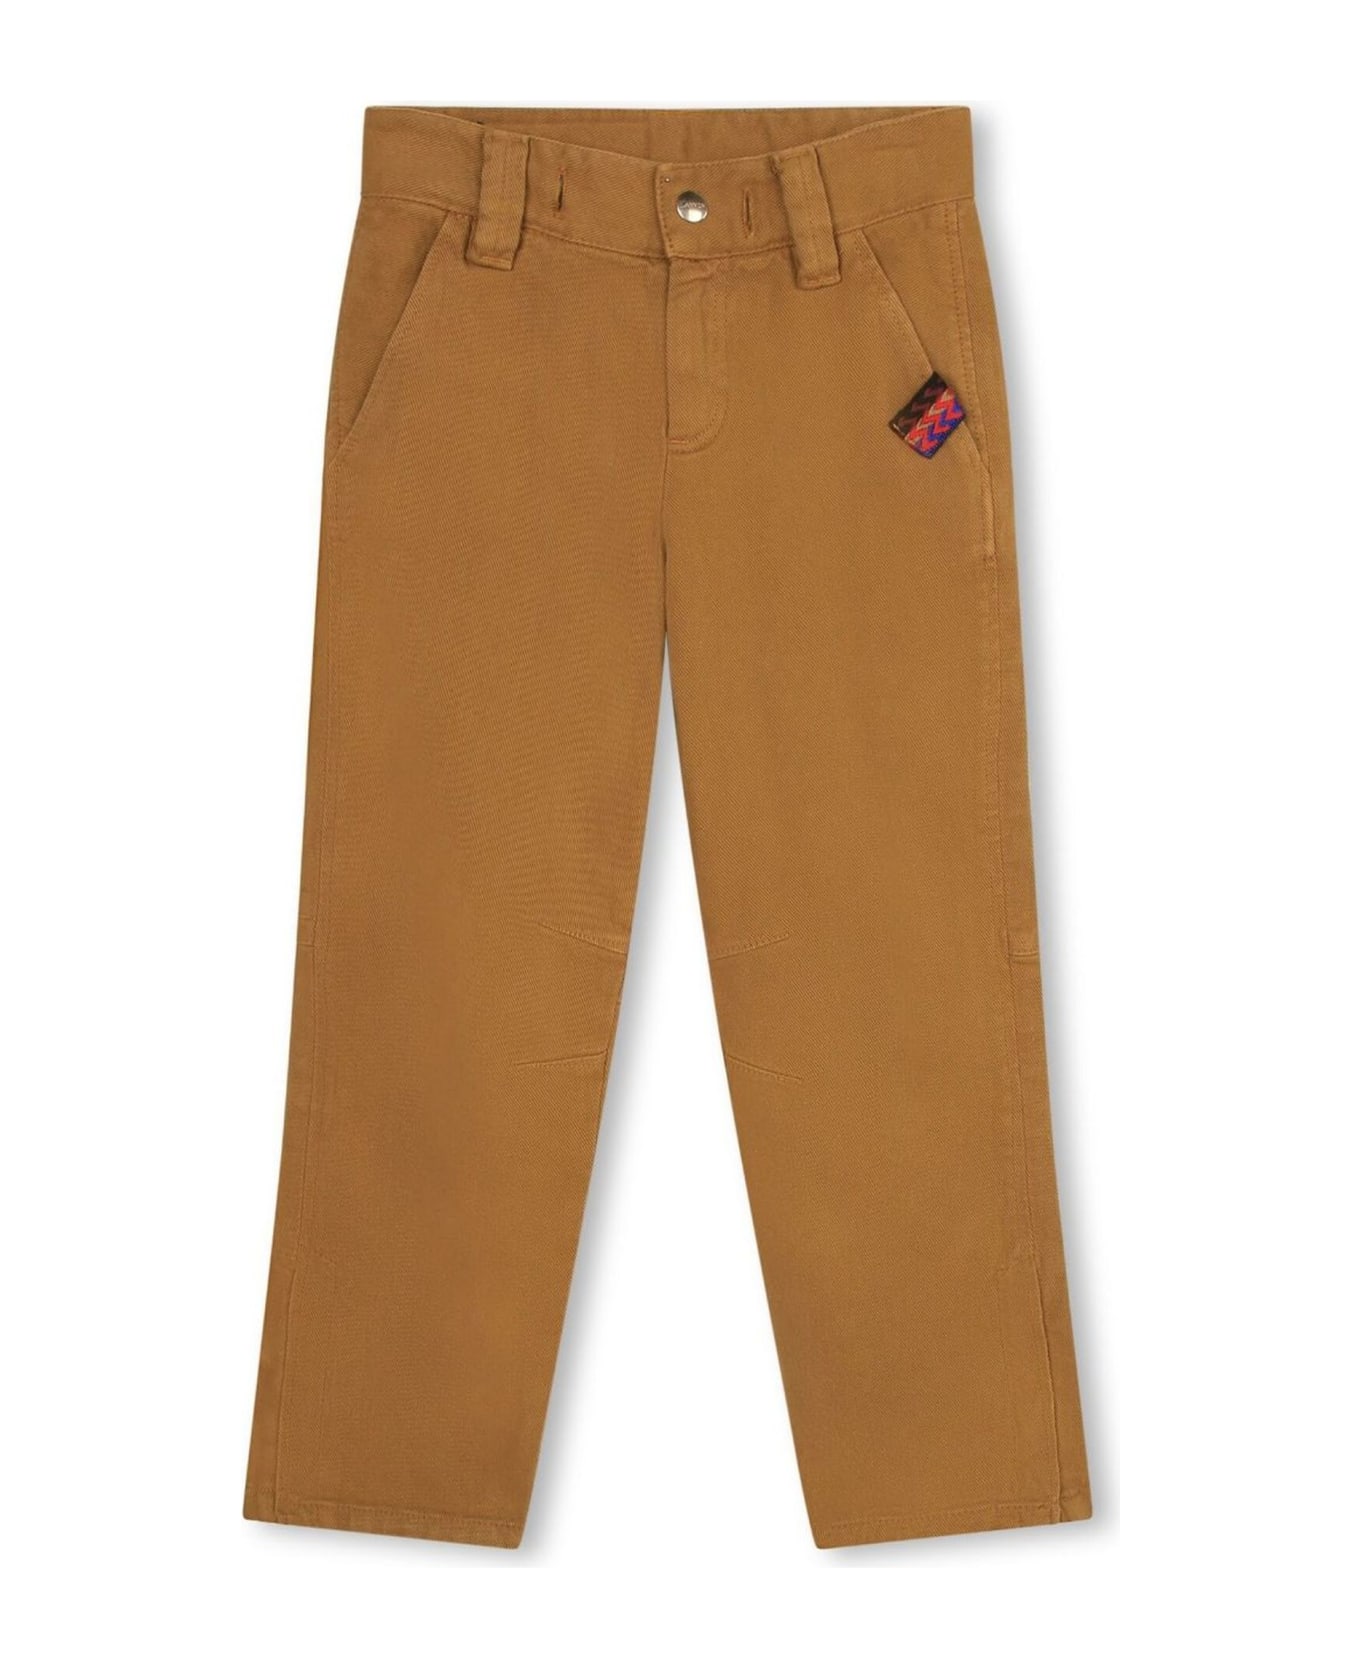 Lanvin Butterscotch Brown Cotton Trousers - Beige ボトムス